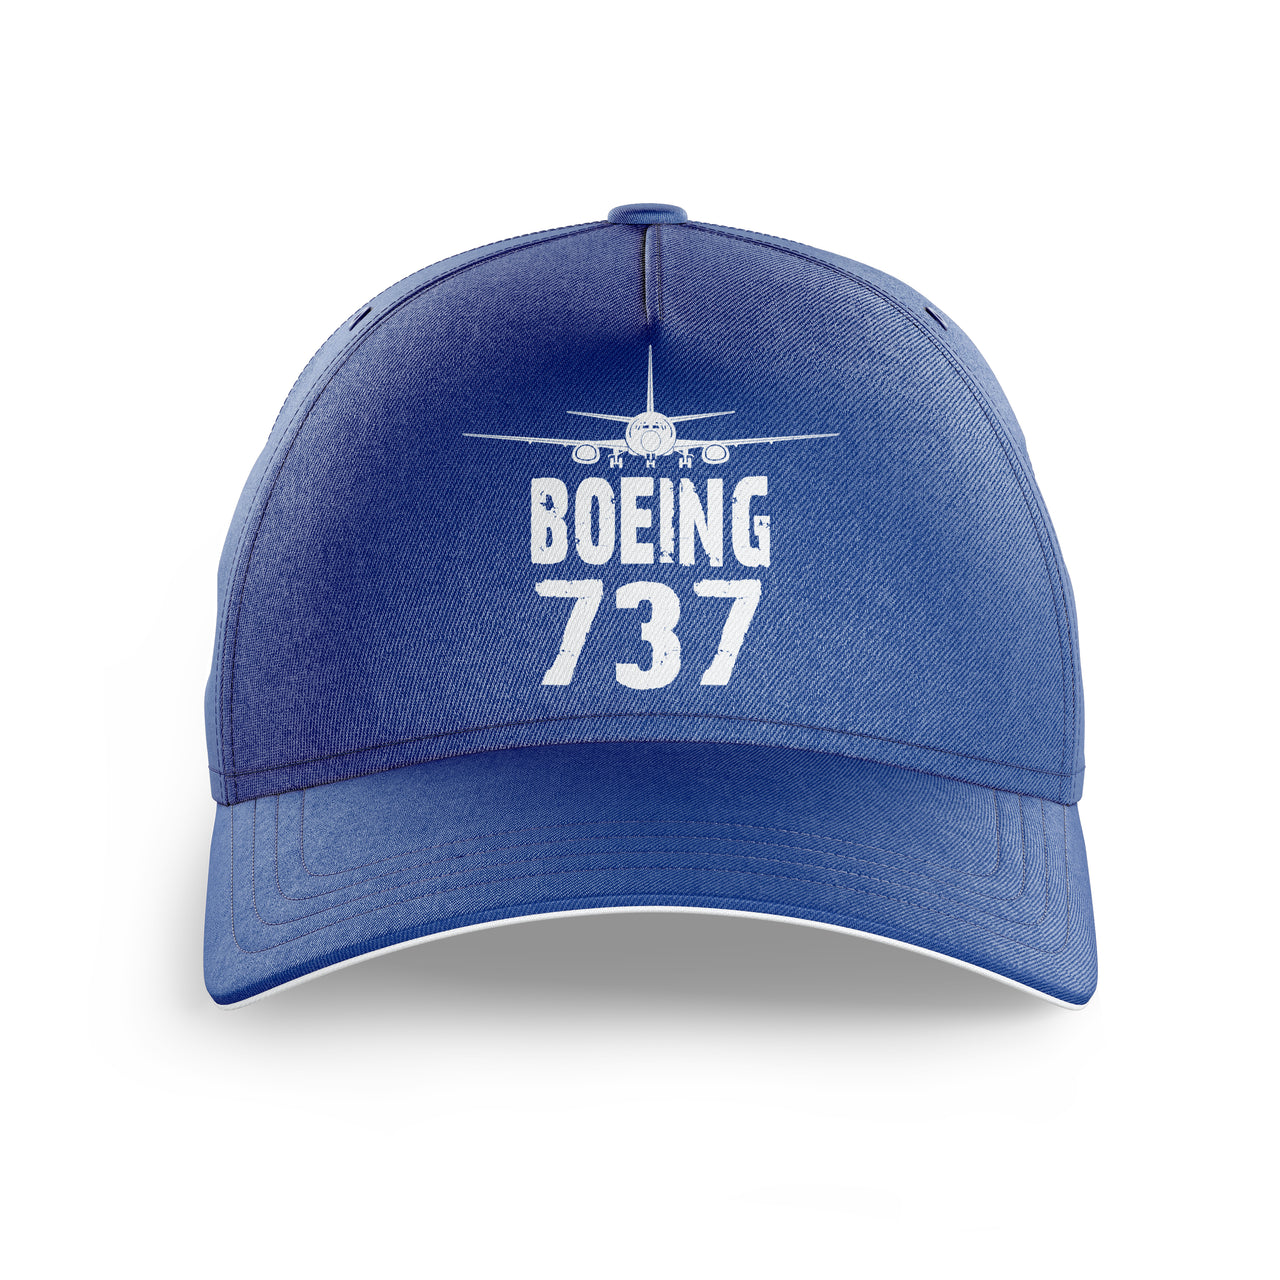 Boeing 737 & Plane Printed Hats